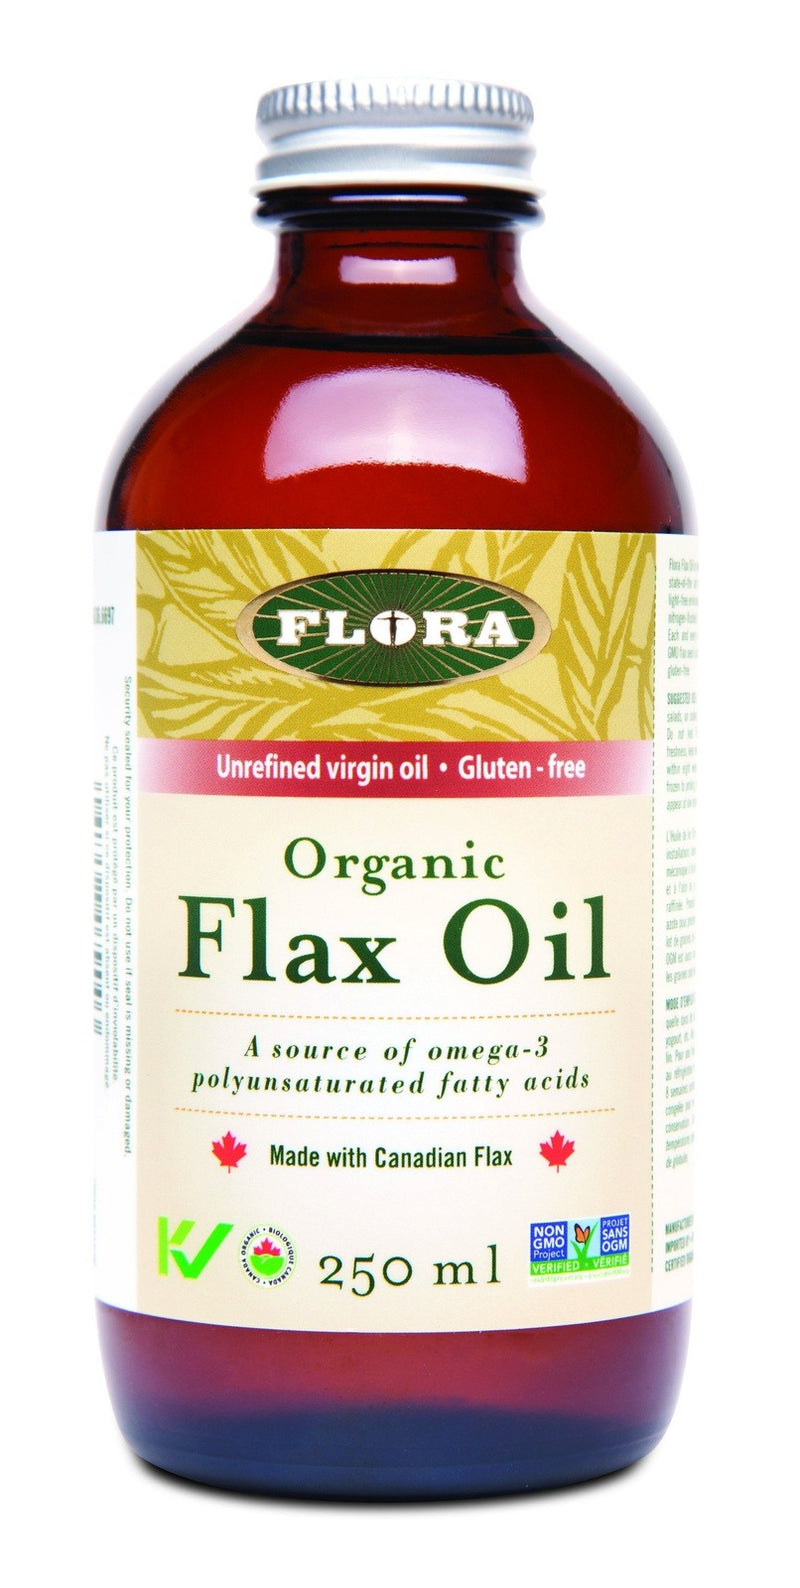 Flora Organic Flax Oil Image 2